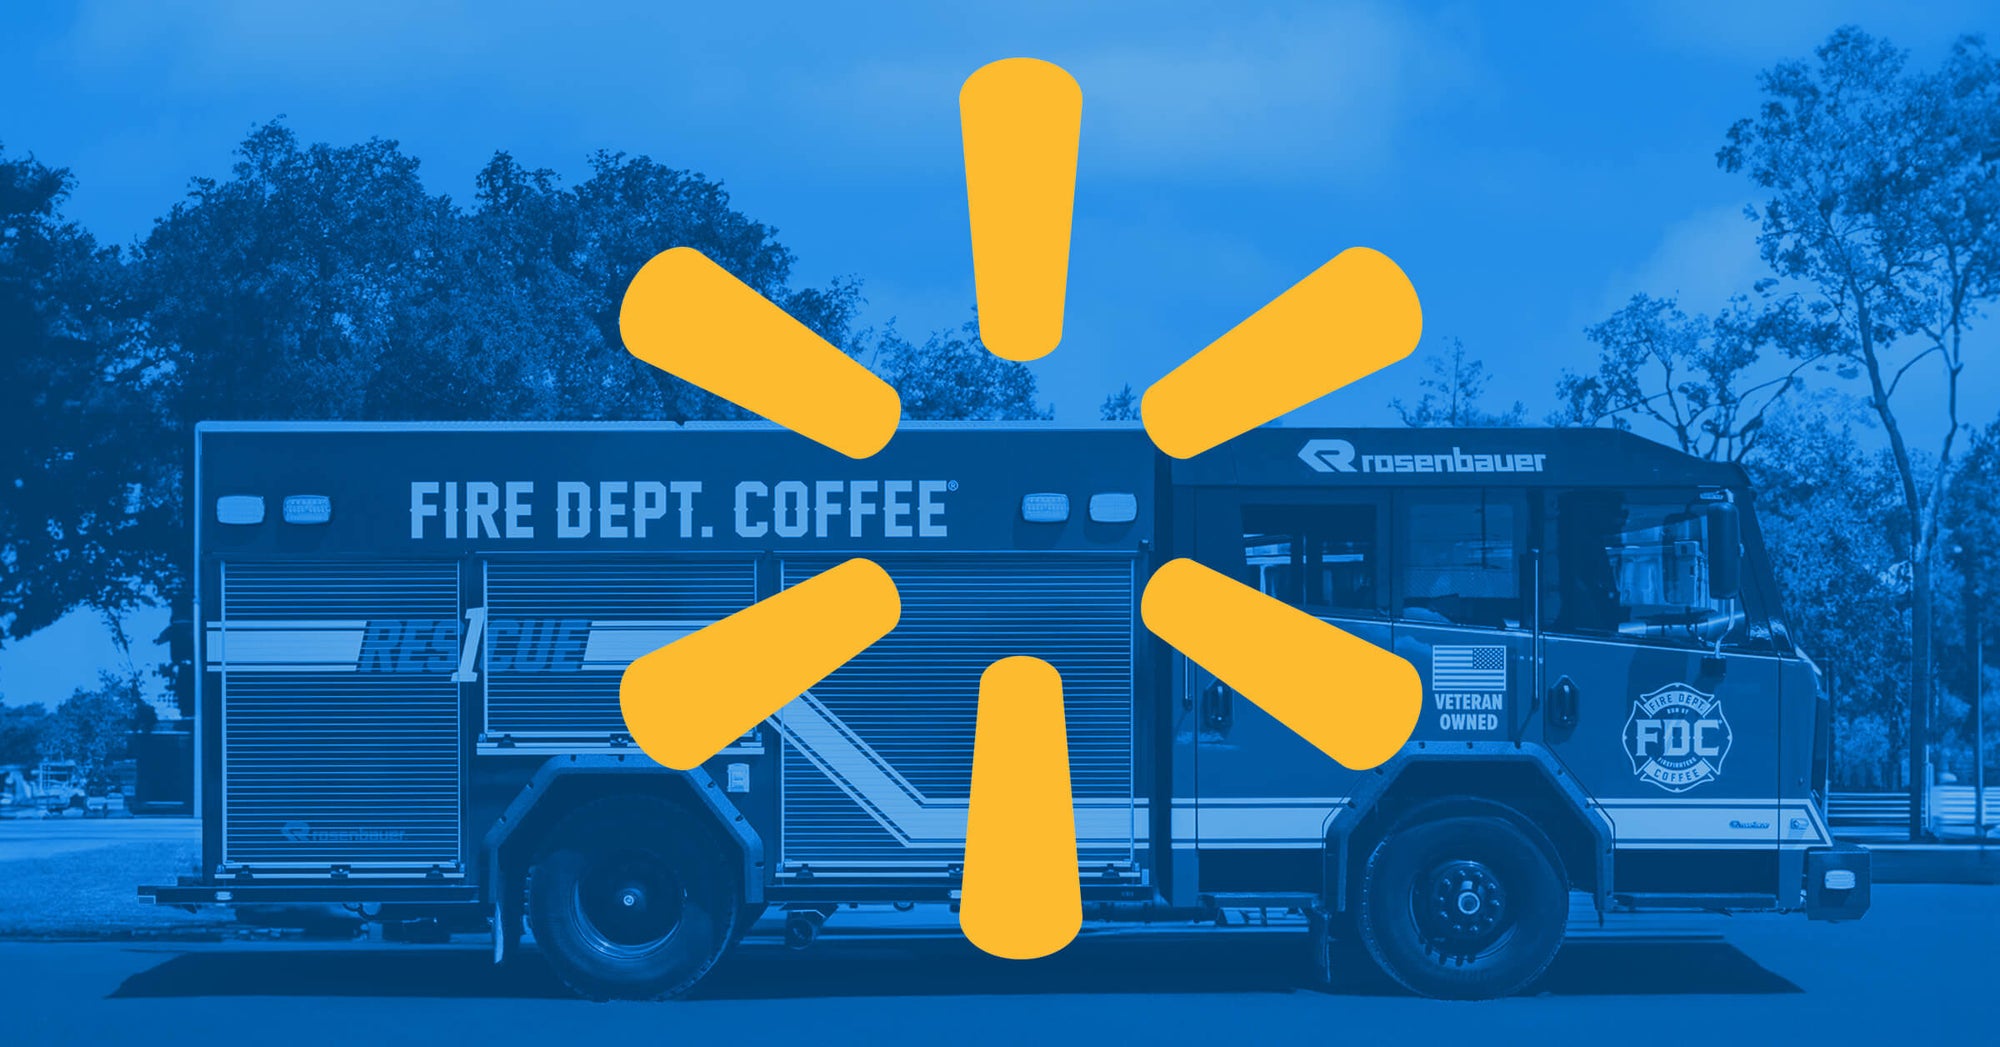 Fire Department Coffee firetruck in background behind Walmart logo.